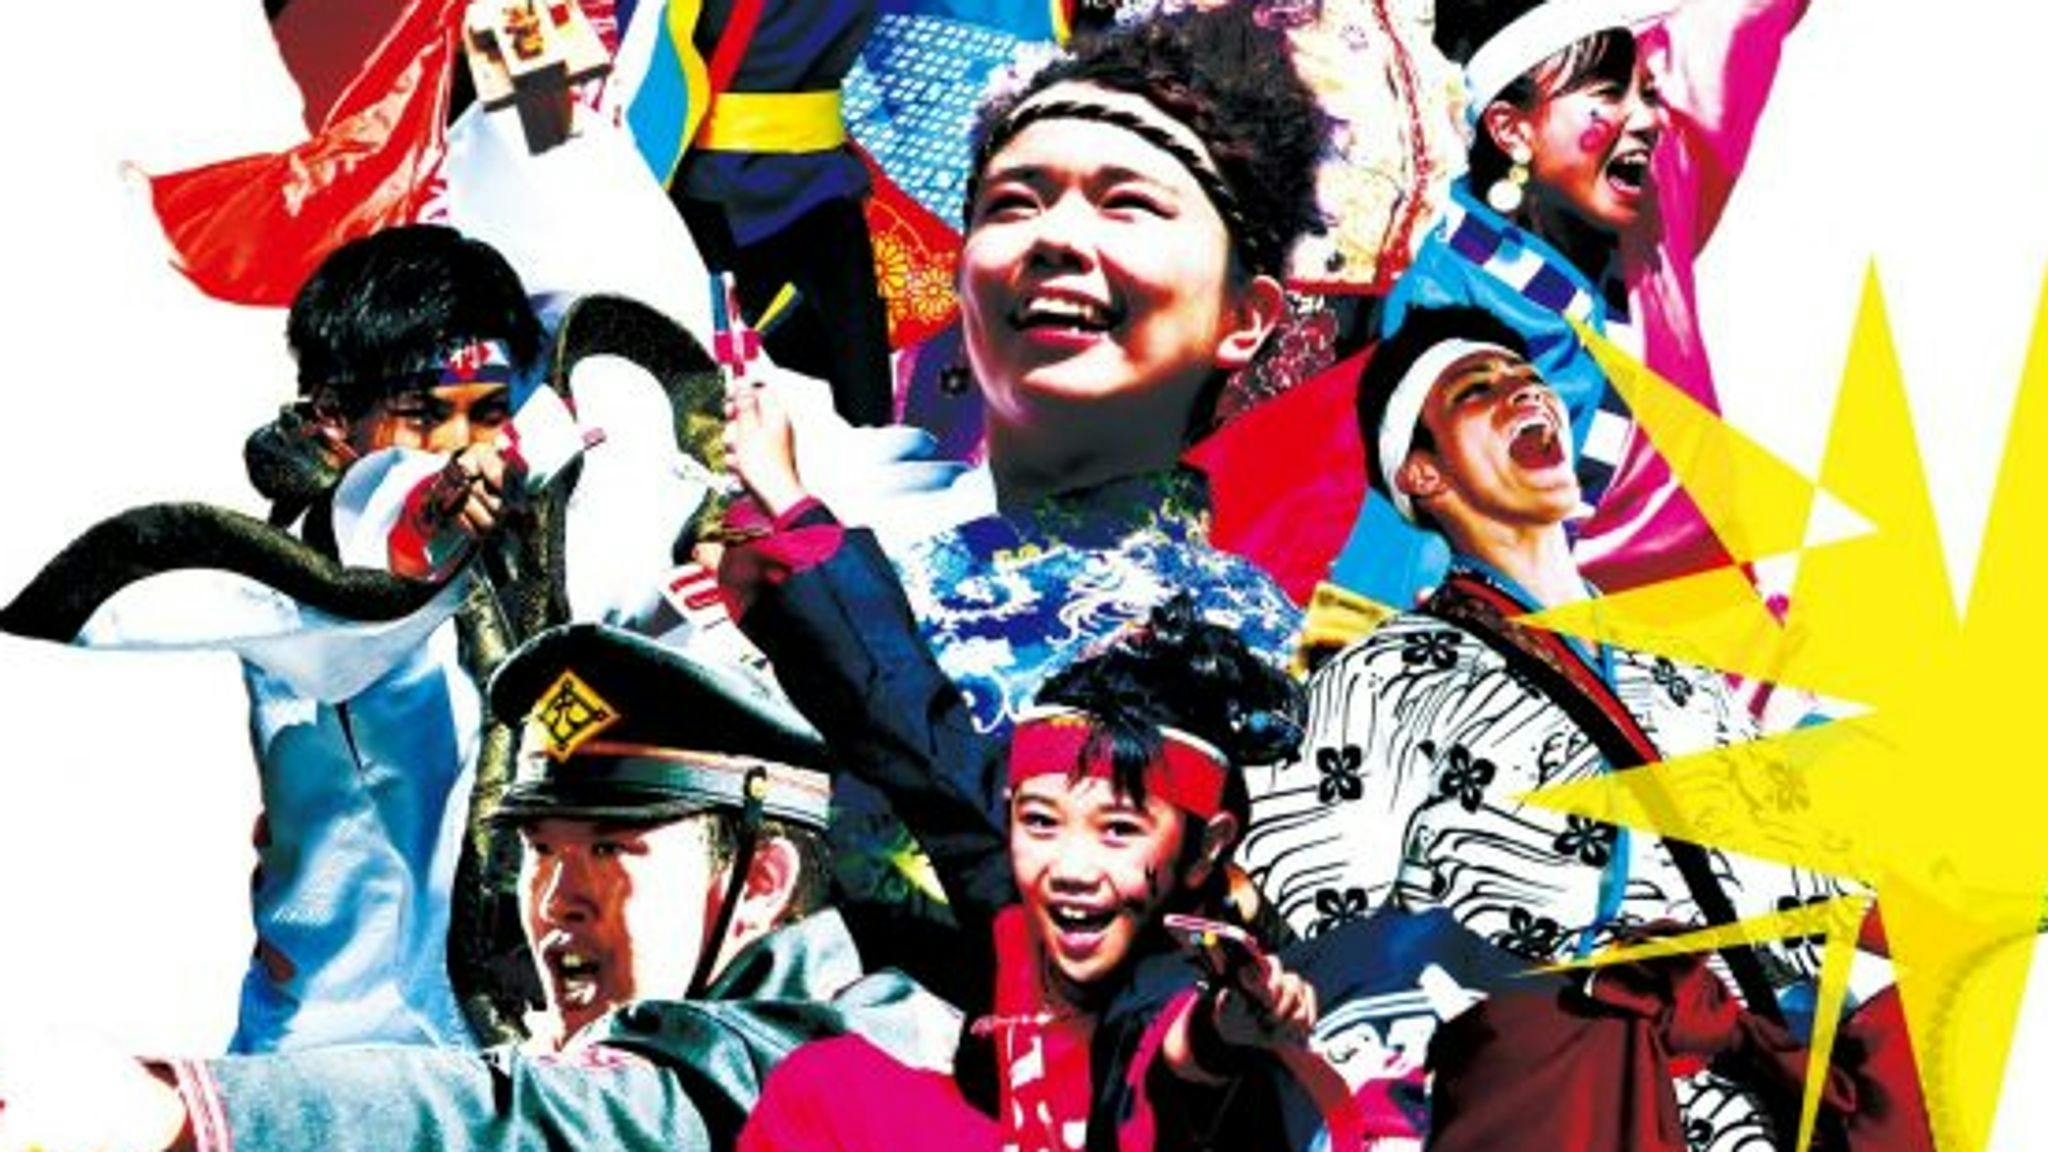 A promotional poster of the Yosakoi Soran Festival 2020